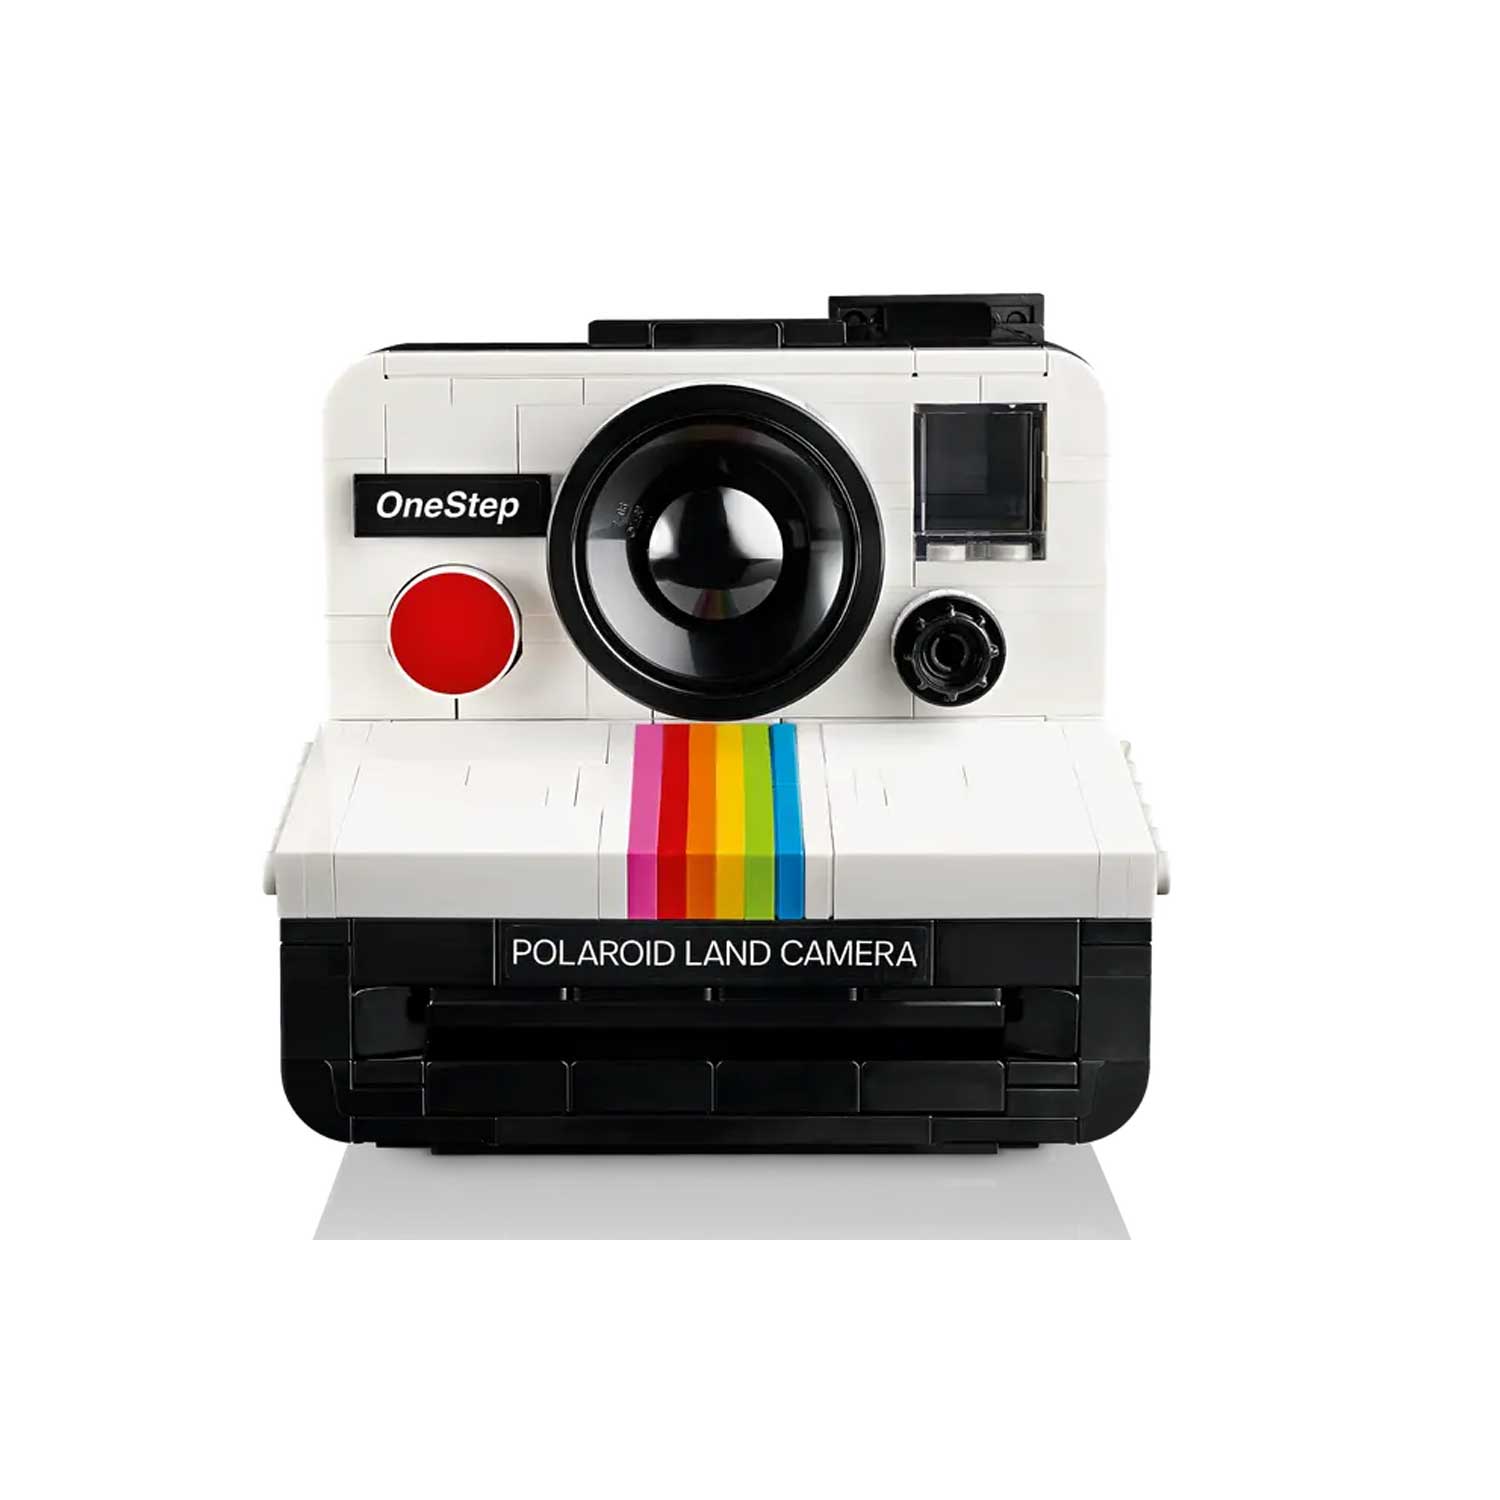 Lego - Ideas Polaroid OneStep SX-70 Camera 21345 – Iperbimbo